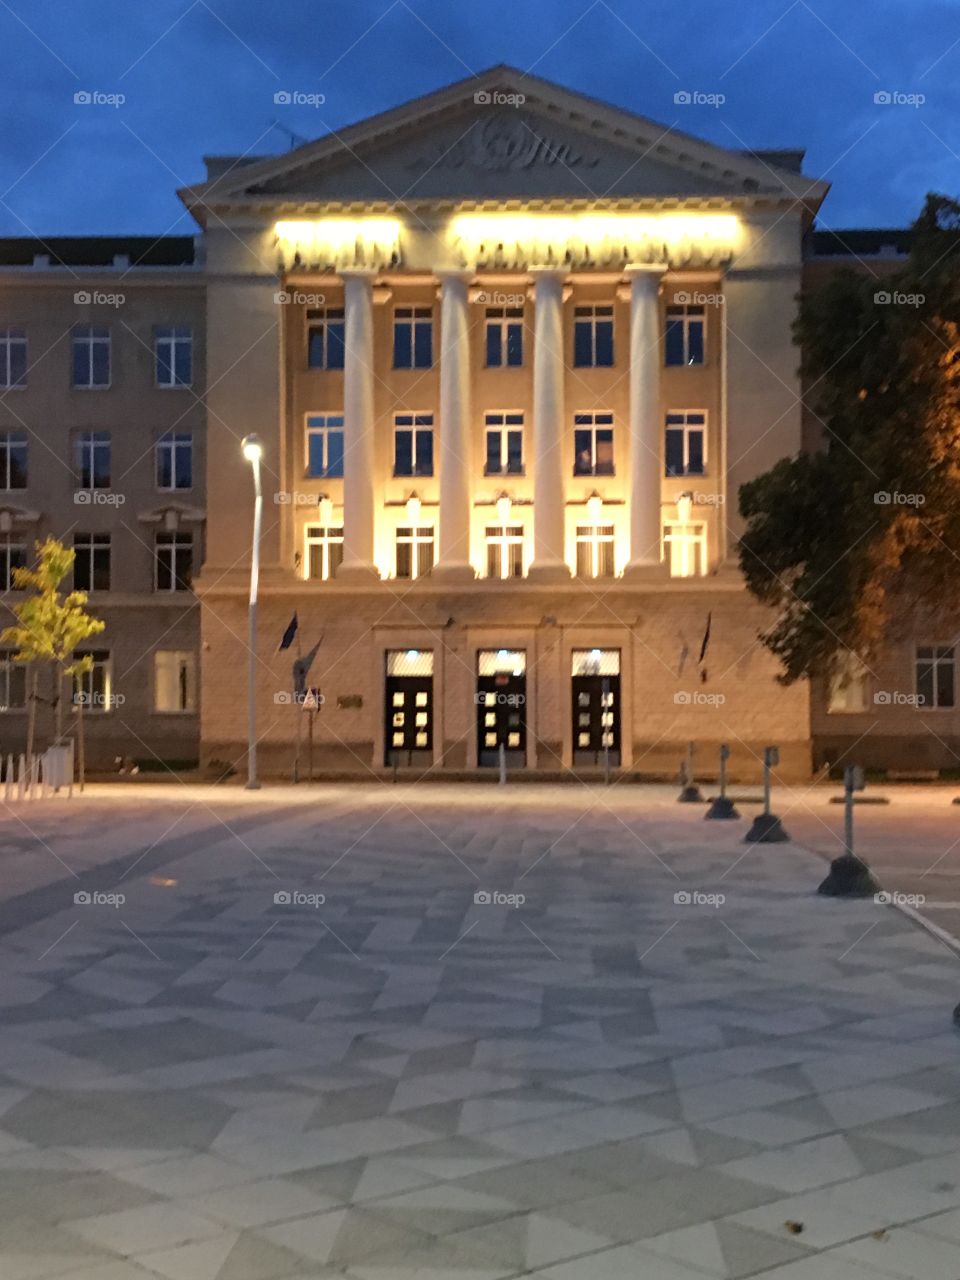 Tallinn school entrance 